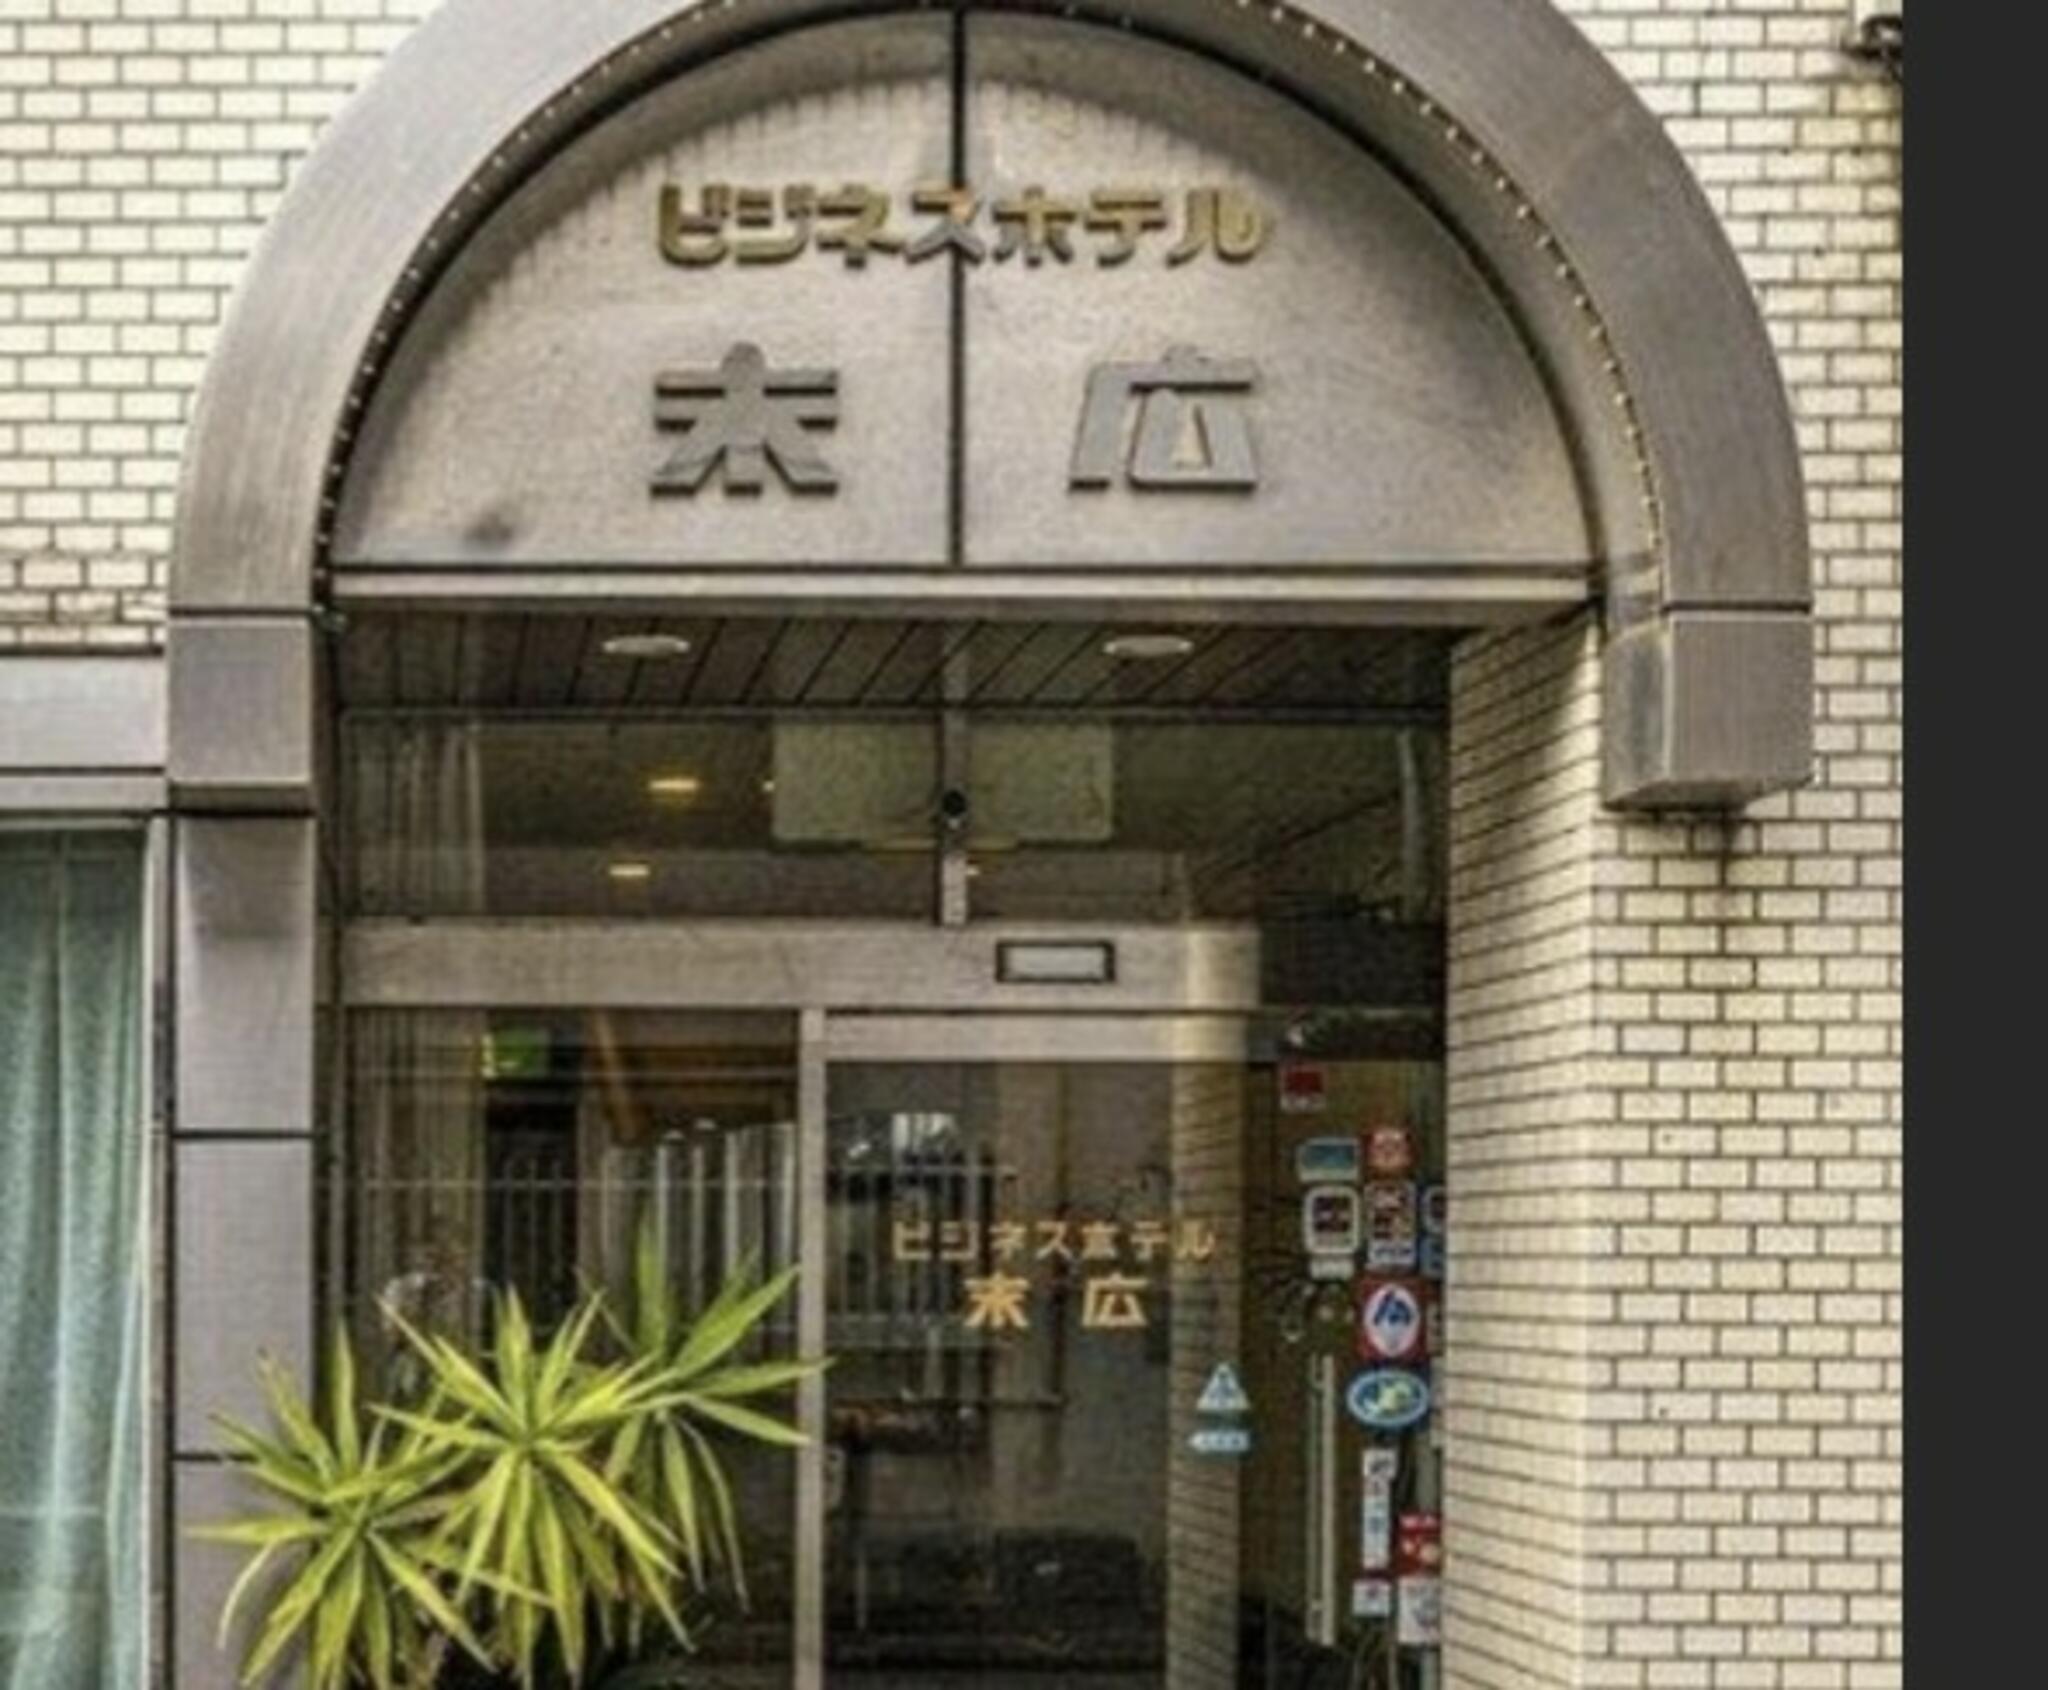 OYO ビジネスホテル末広 松山の代表写真3